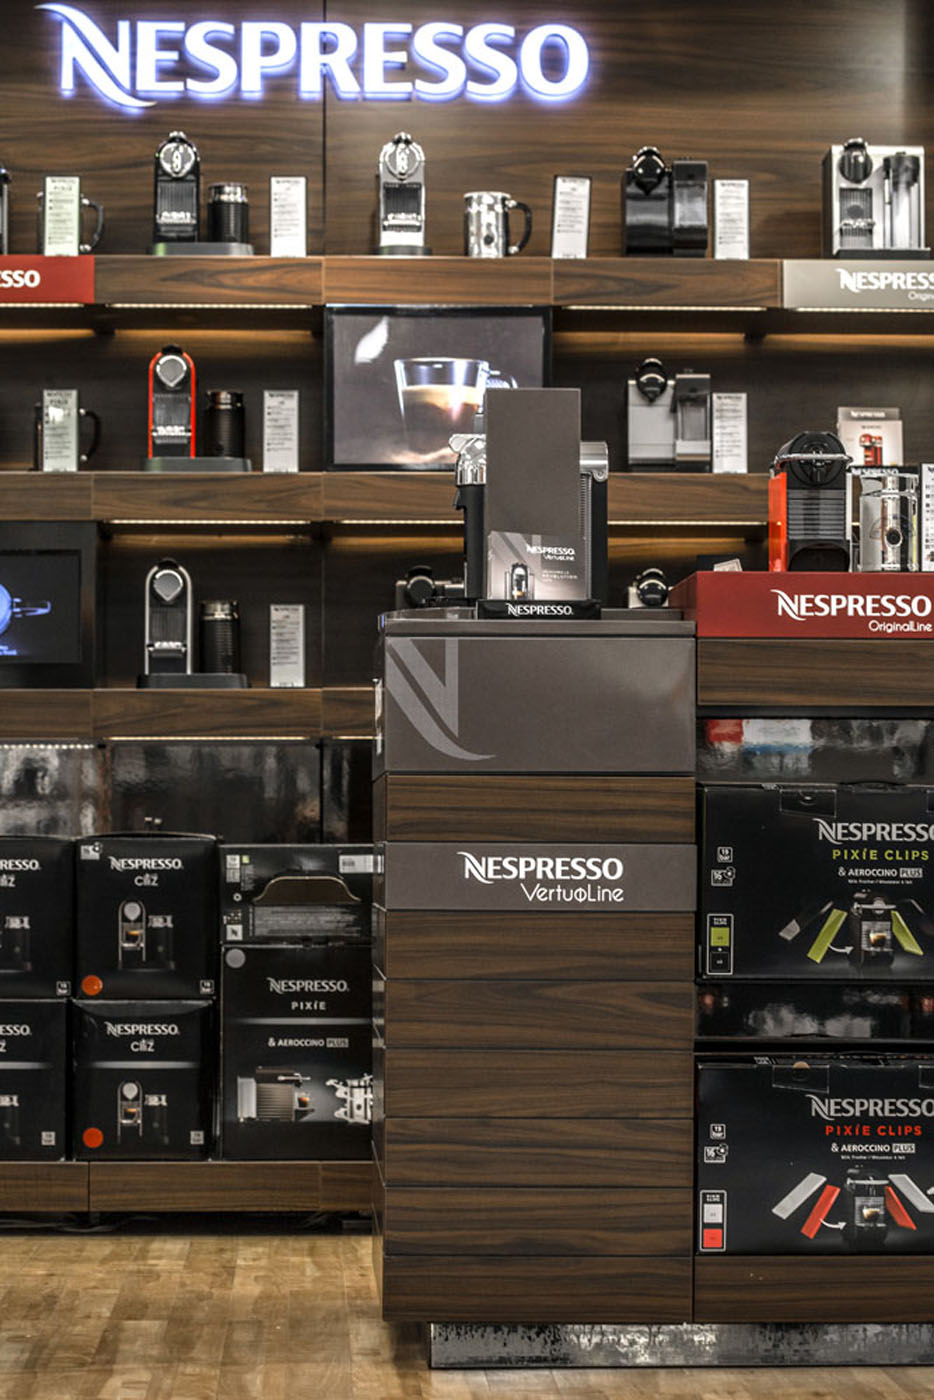 Nespresso Store Design- Custom Shop-in Shop Retail Furniture - Beverage and Houseware Display Fixture